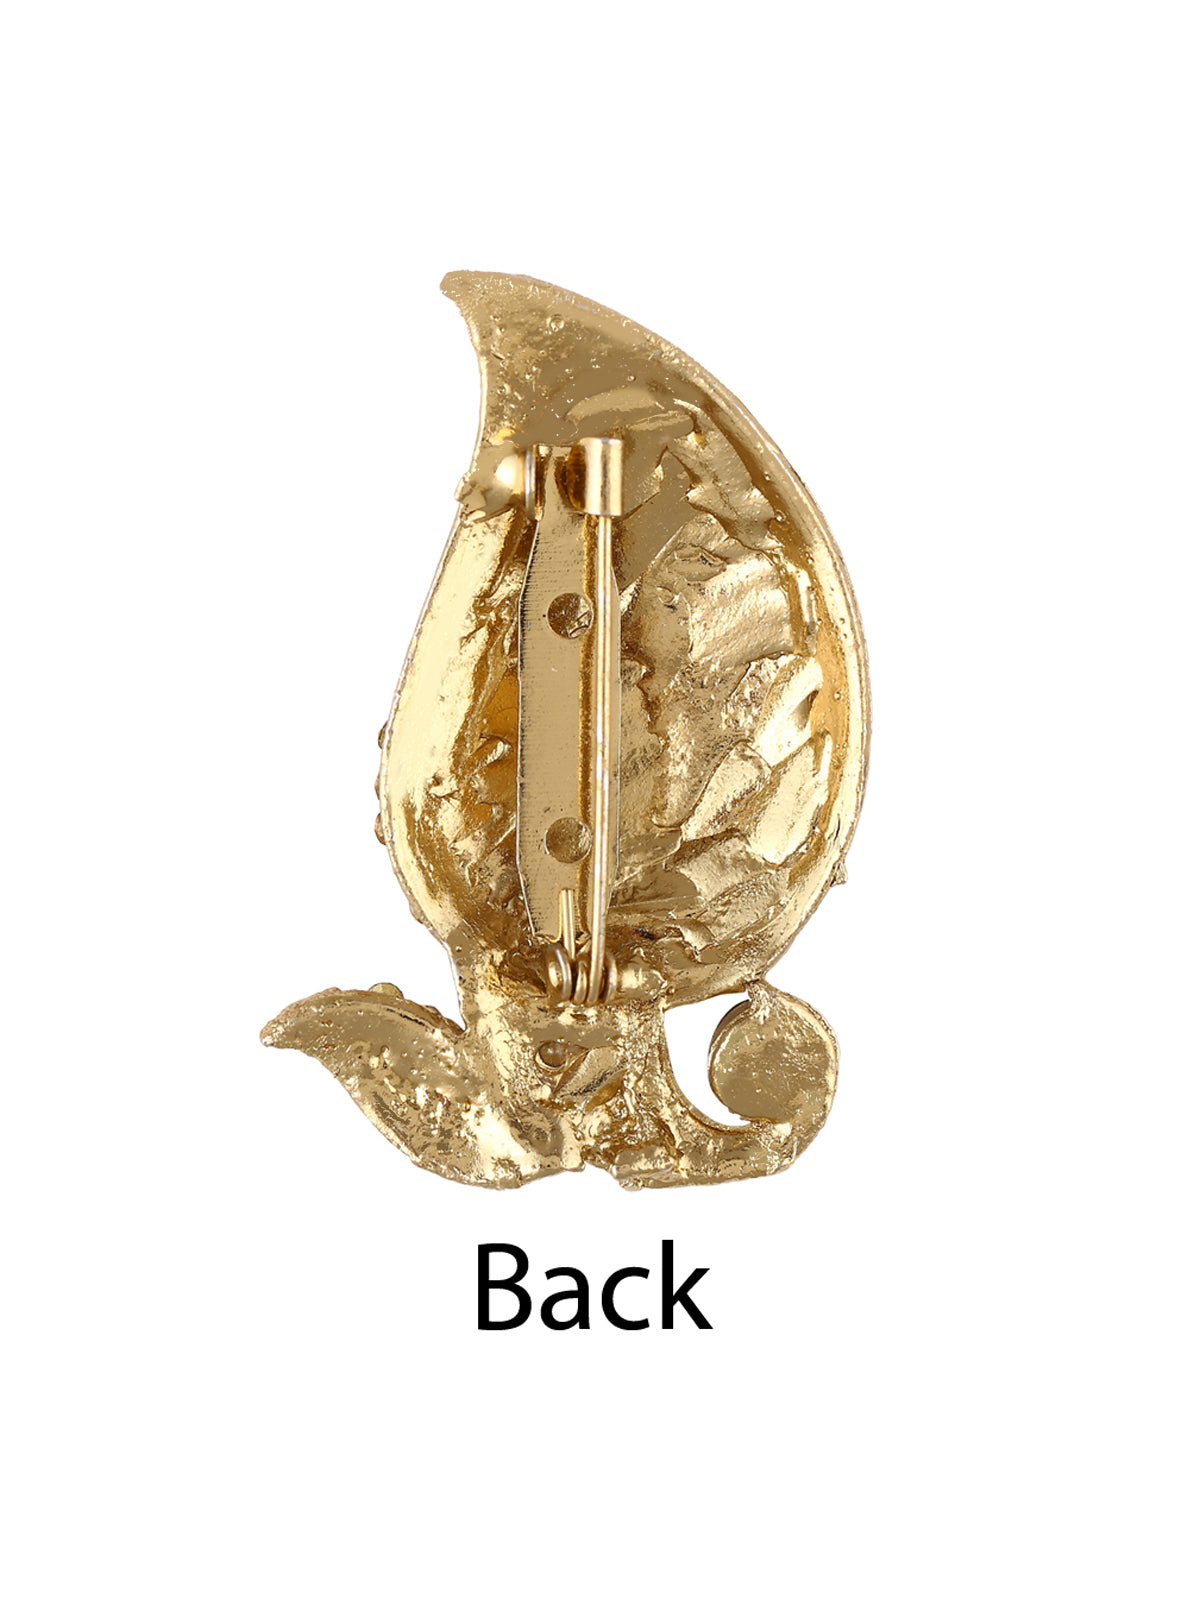 Golden Leaf Design Ethnic Diamond Brooch